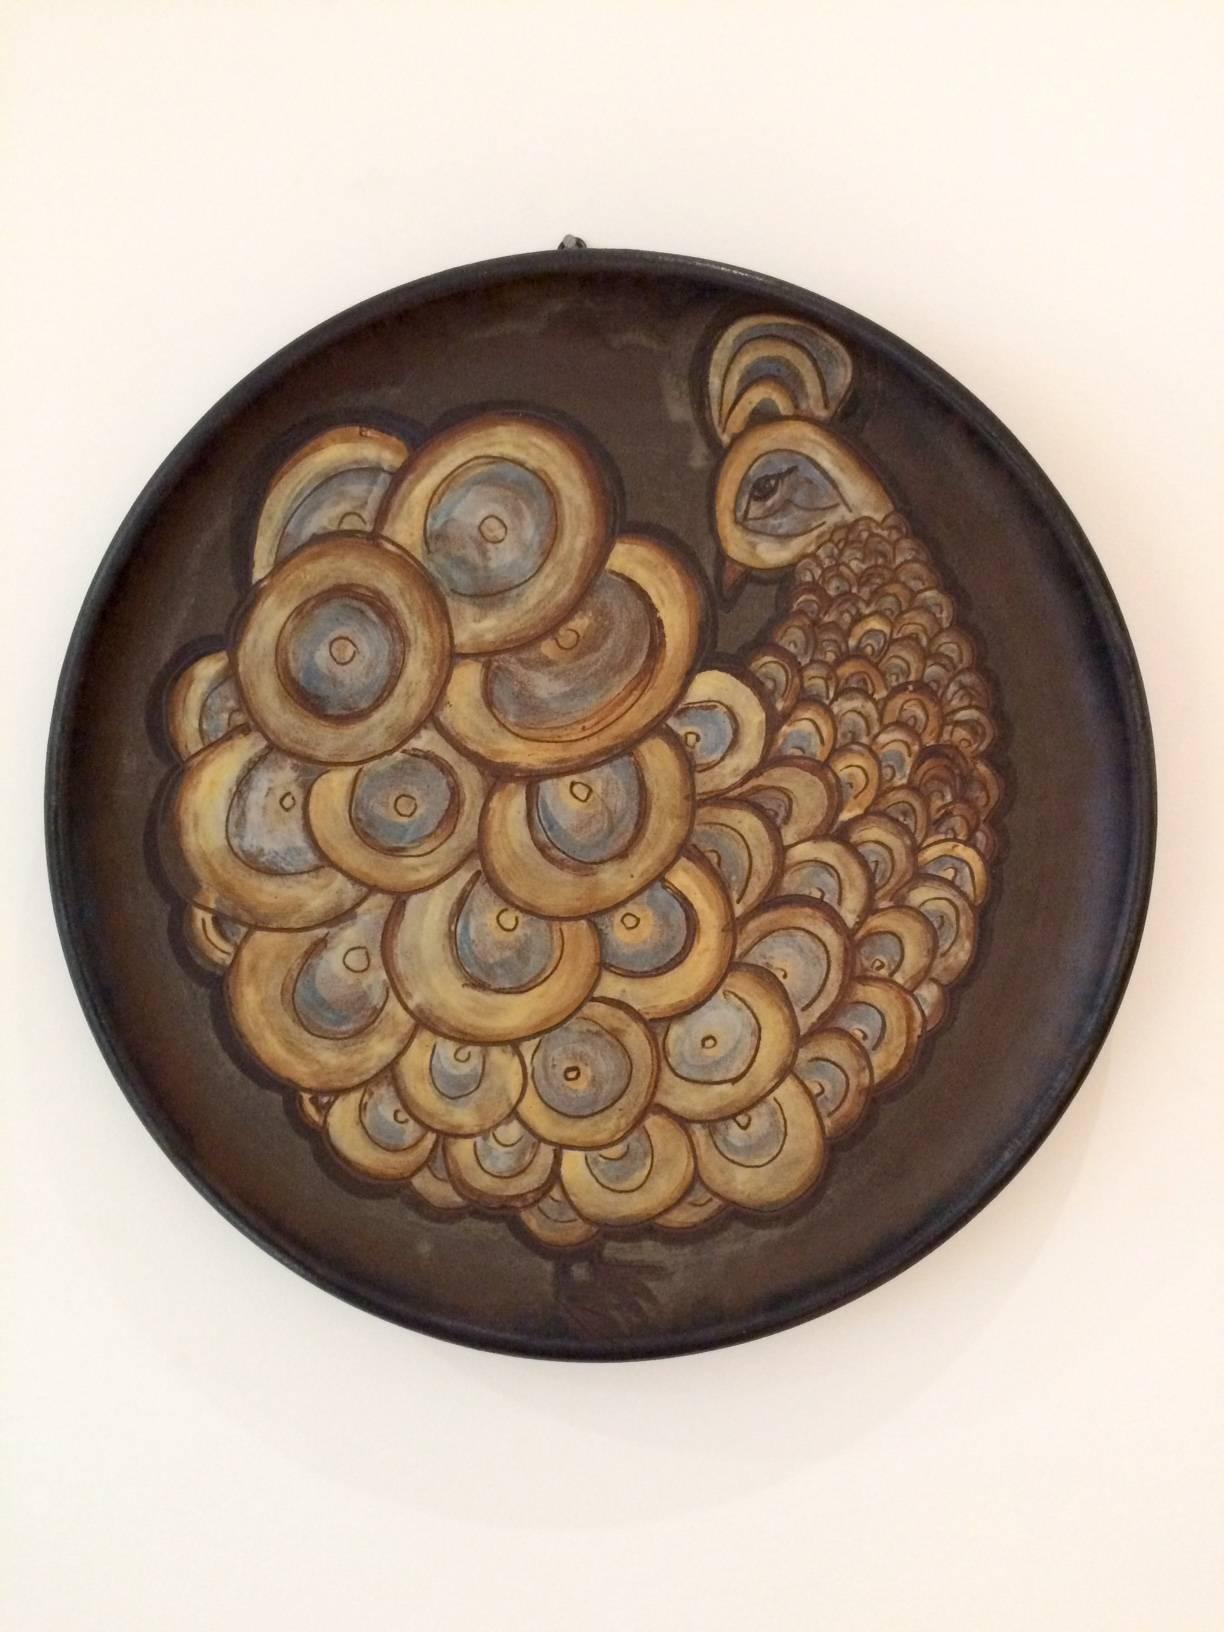 Nice stylised golden / brown peacock ceramic decorative dish.
Signed Kostanda / Vallauris.